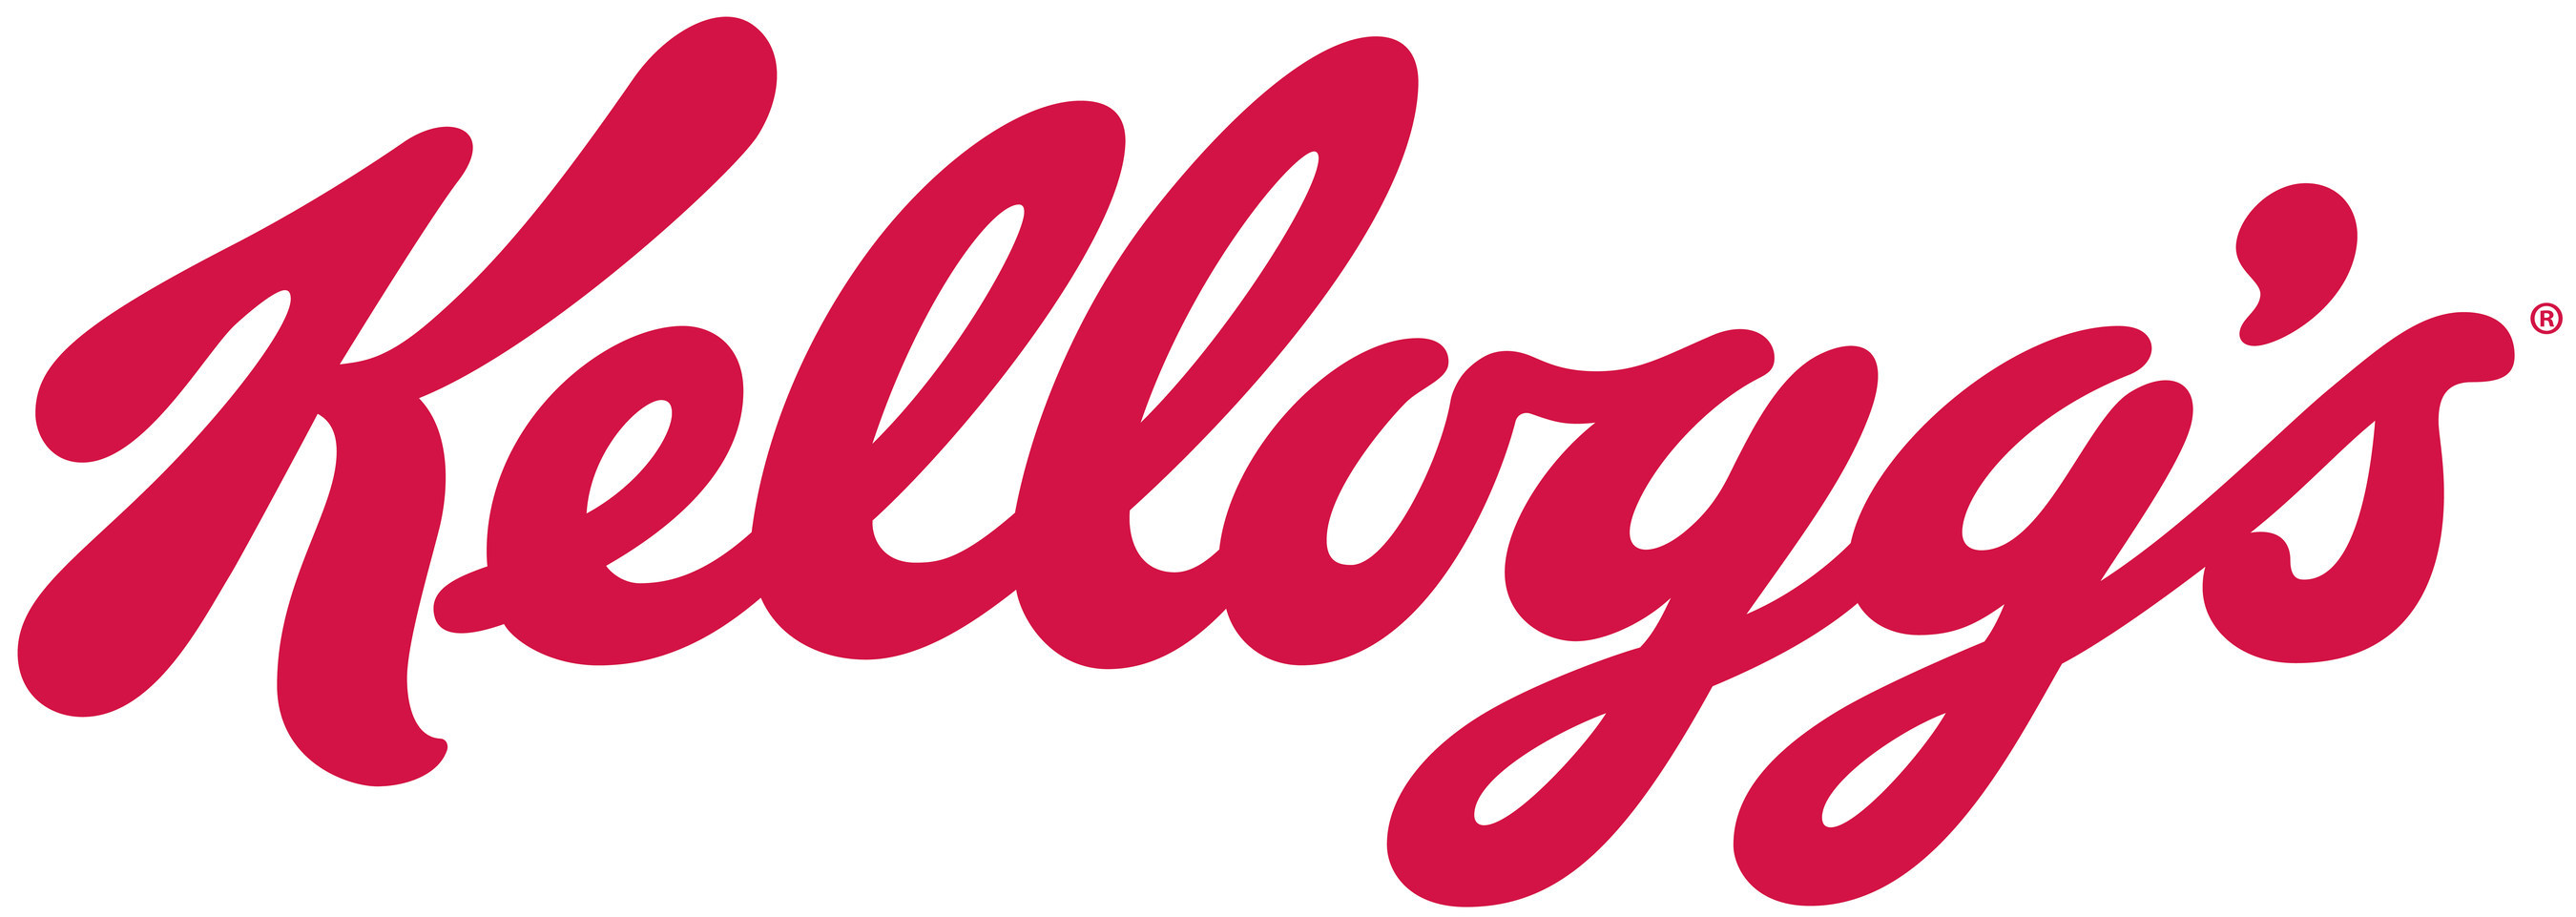 https://mma.prnewswire.com/media/292965/Kelloggs_Logo.jpg?p=publish